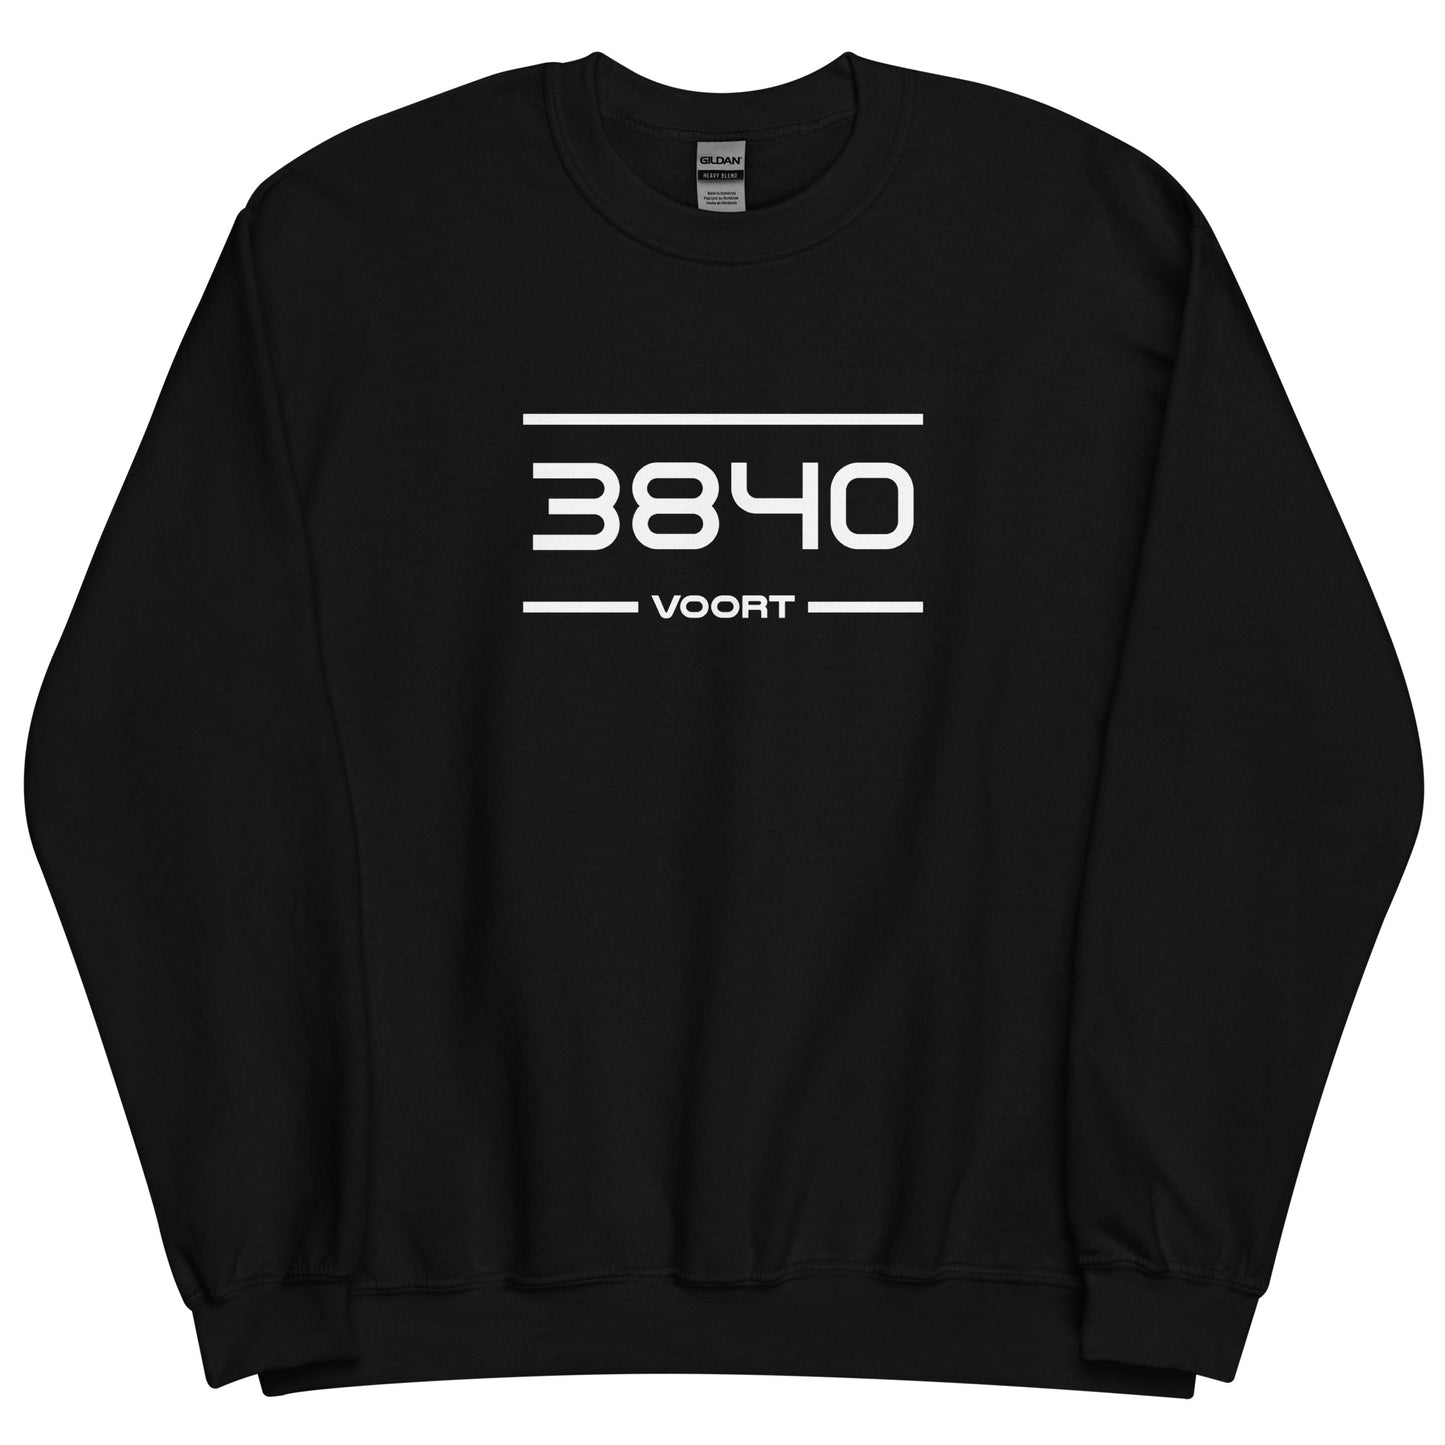 Sweater - 3840 - Voort (M/V)